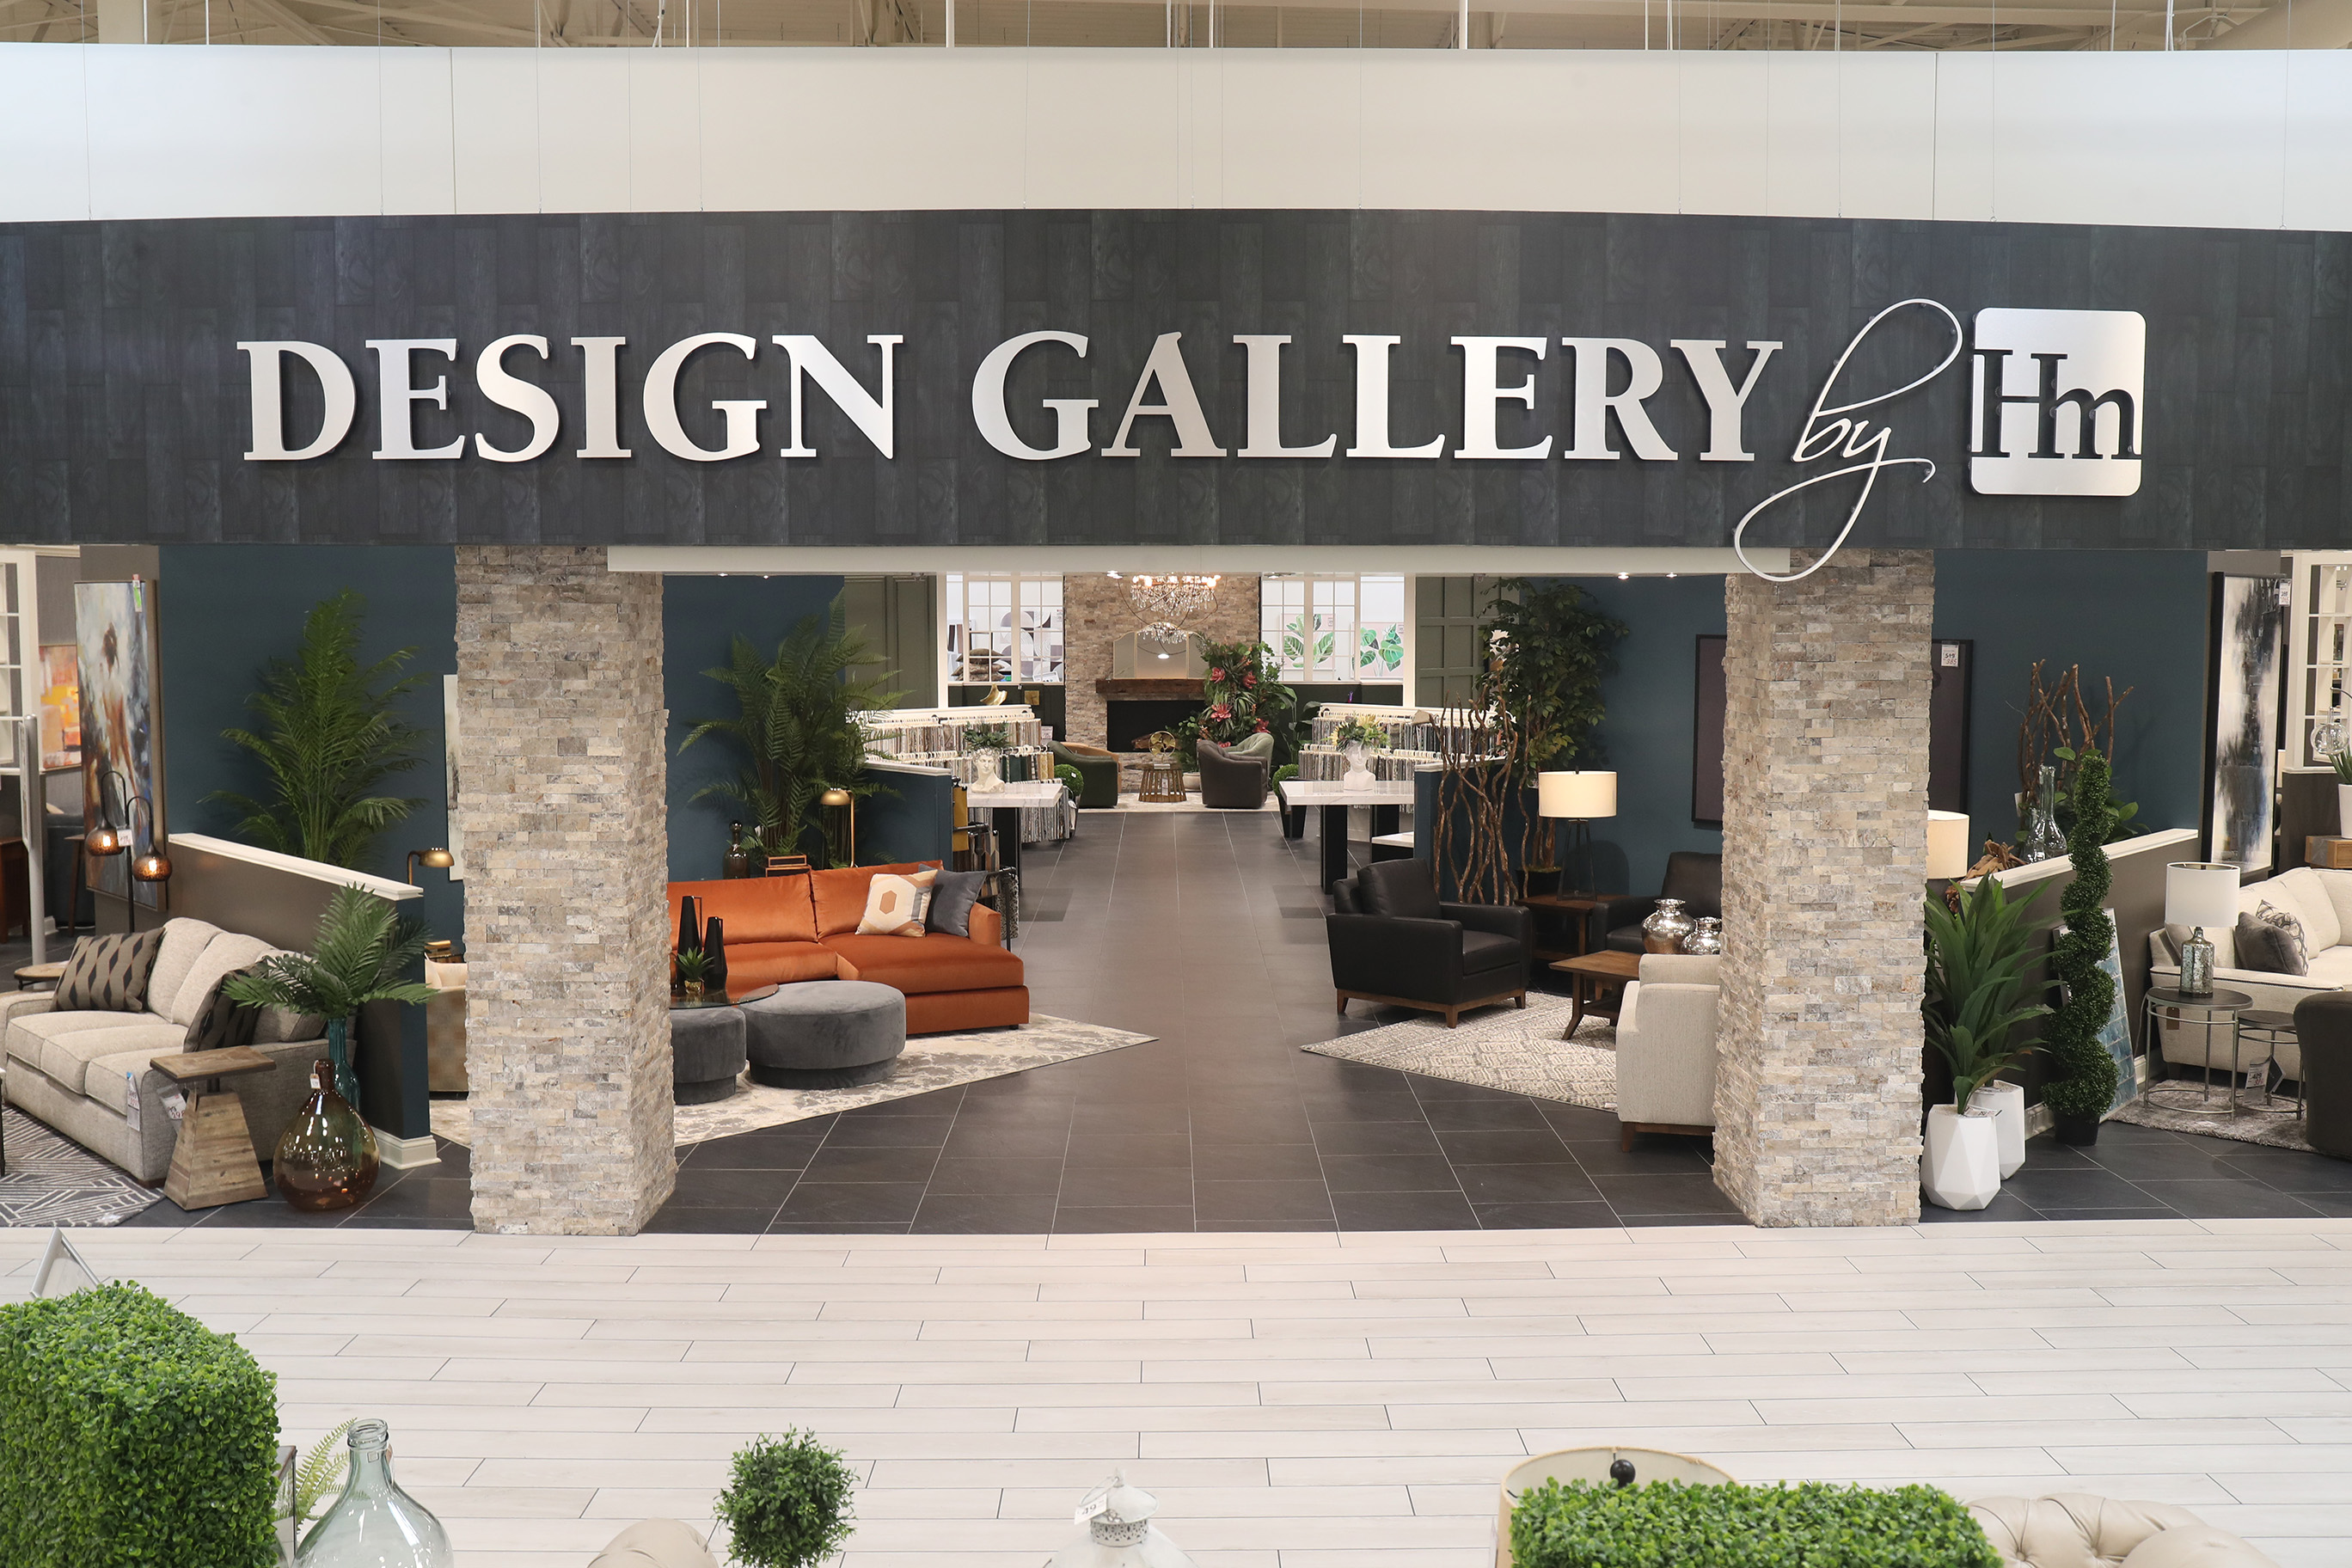 Hm Design Gallery